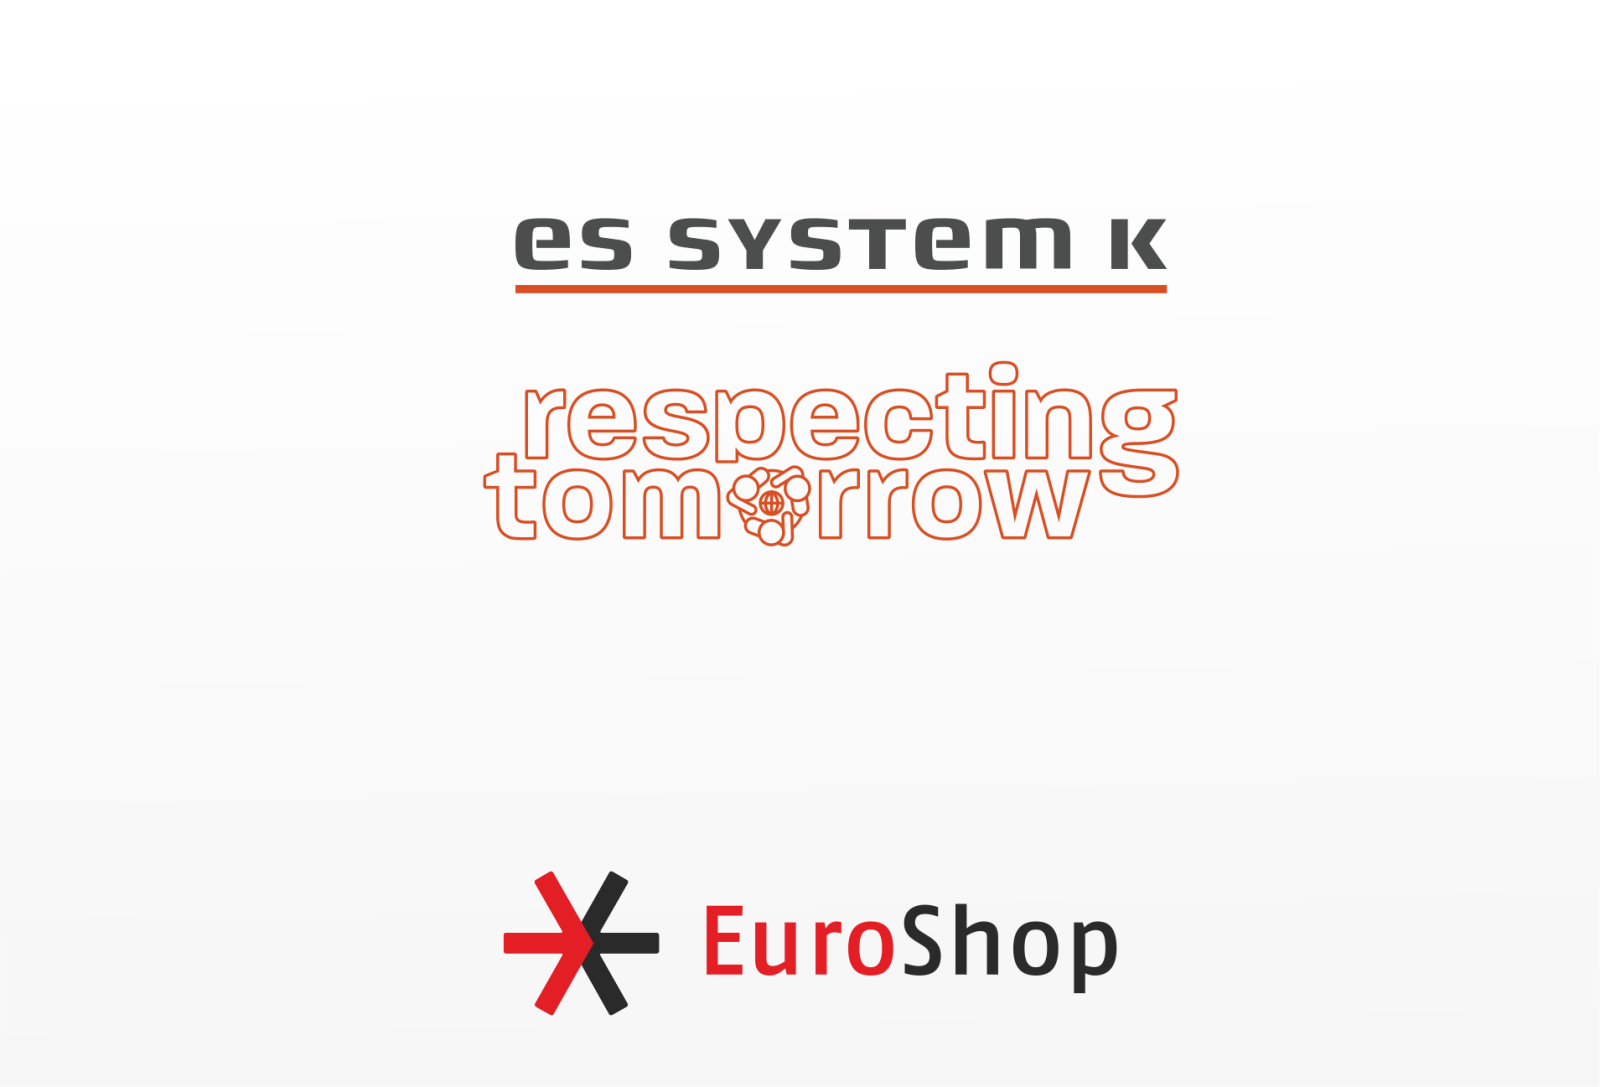 ES SYSTEM K at Euroshop for the 6th time!